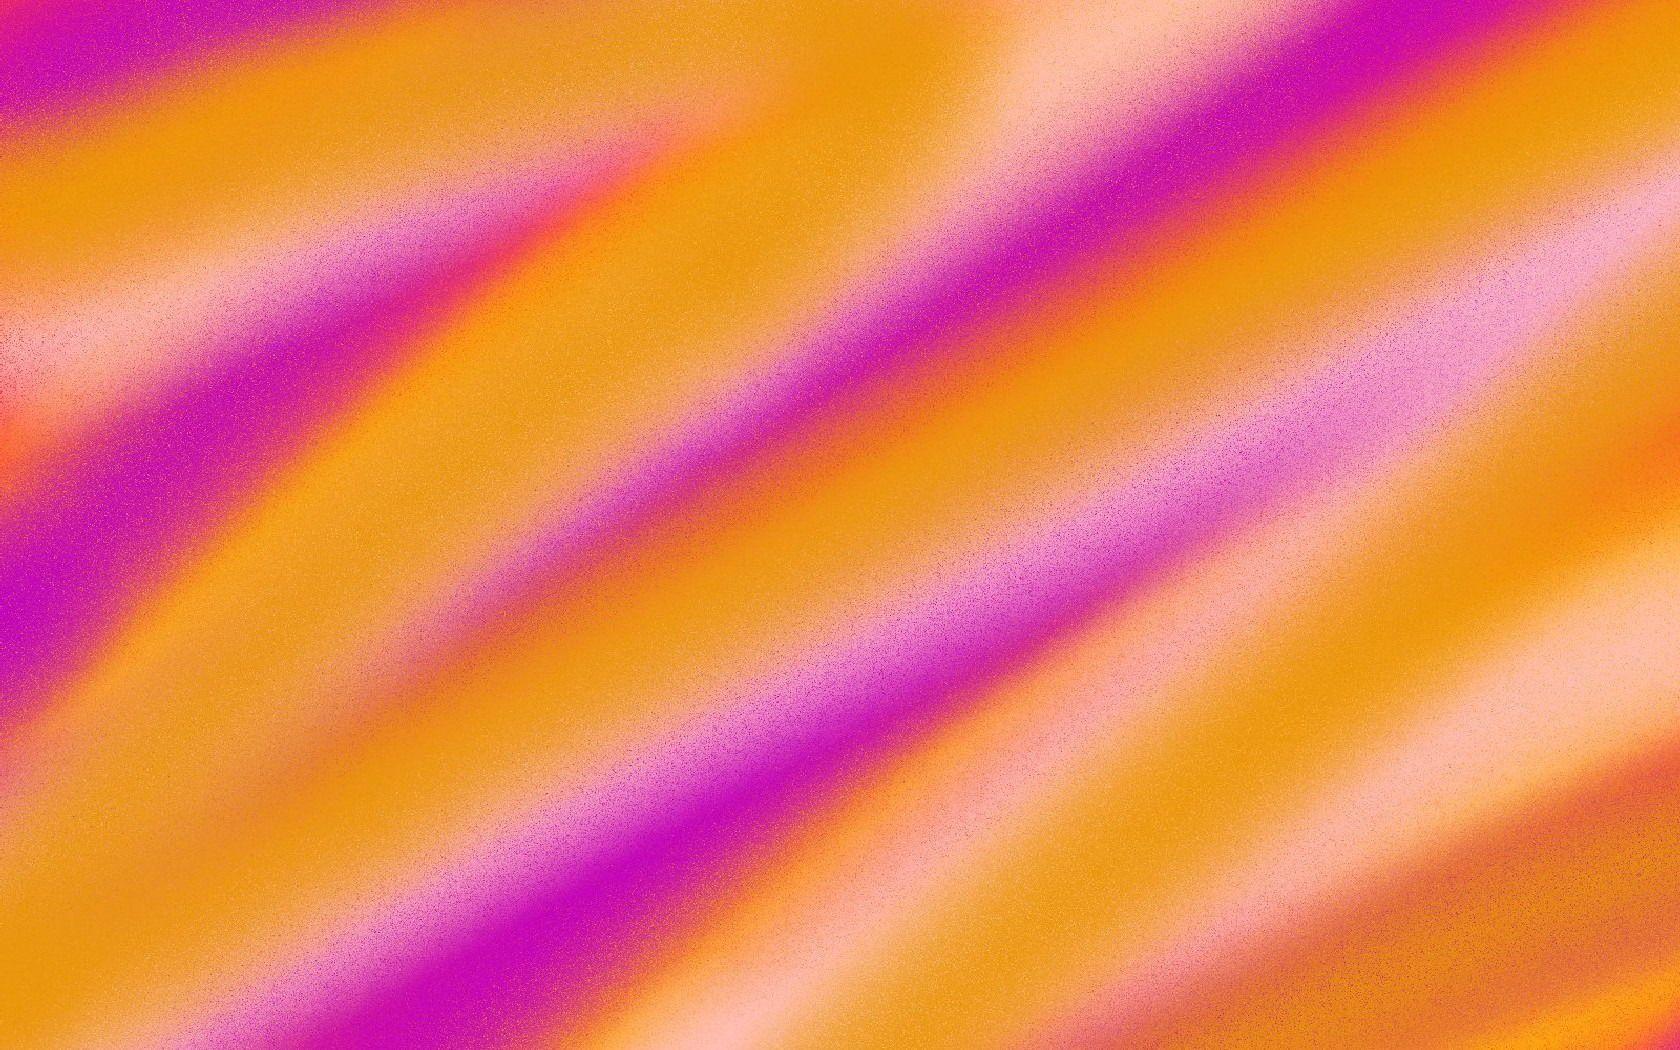 Purple and Orange Wallpaper Free Purple and Orange Background